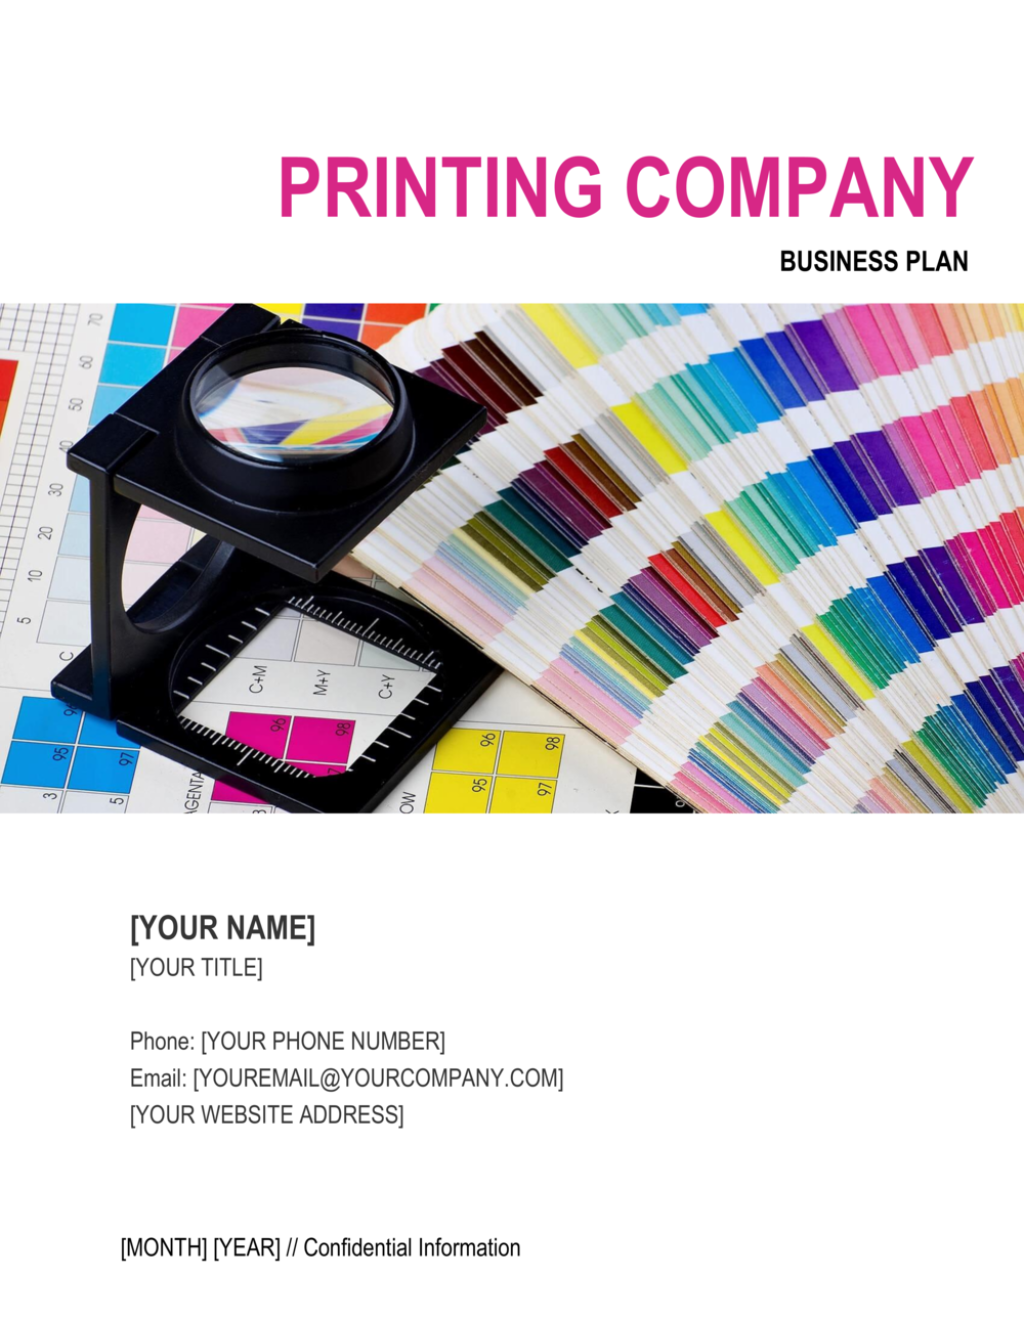 printing shop business plan example - Printing Company Business Plan Template  Business-in-a-Box™